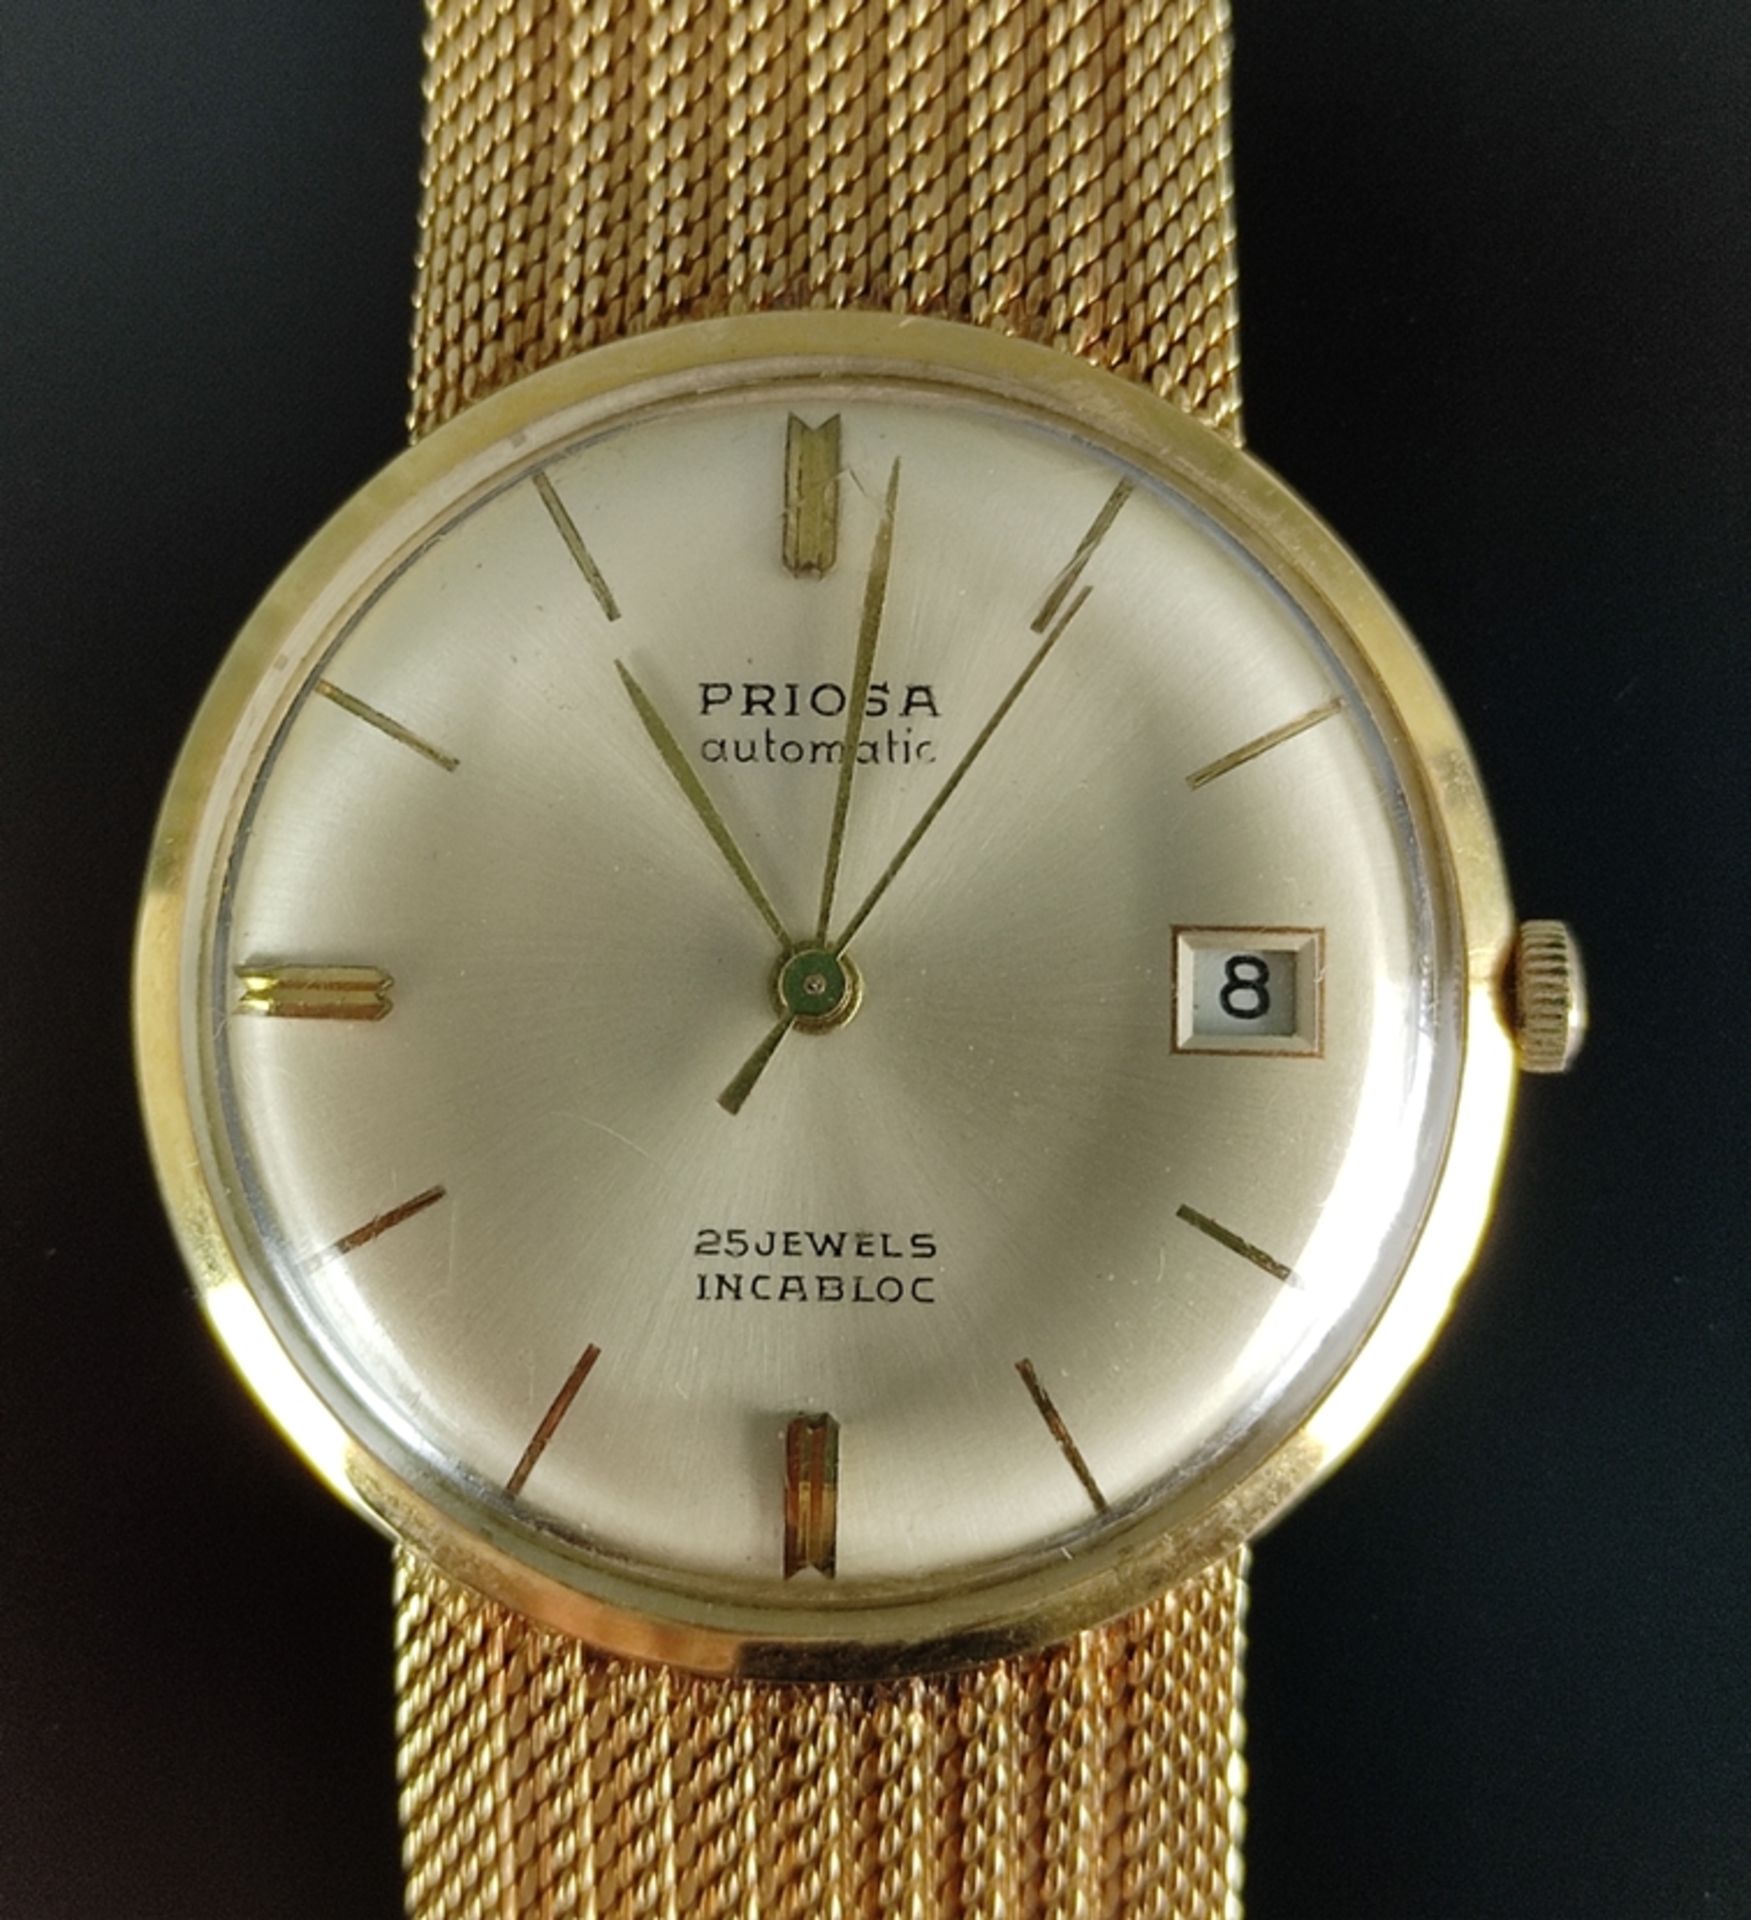 Armbanduhr, Priosa, rundes Ziffernblatt mit Goldindizes, Tagesanzeige, Automatik, flexibles Flechta - Bild 3 aus 4